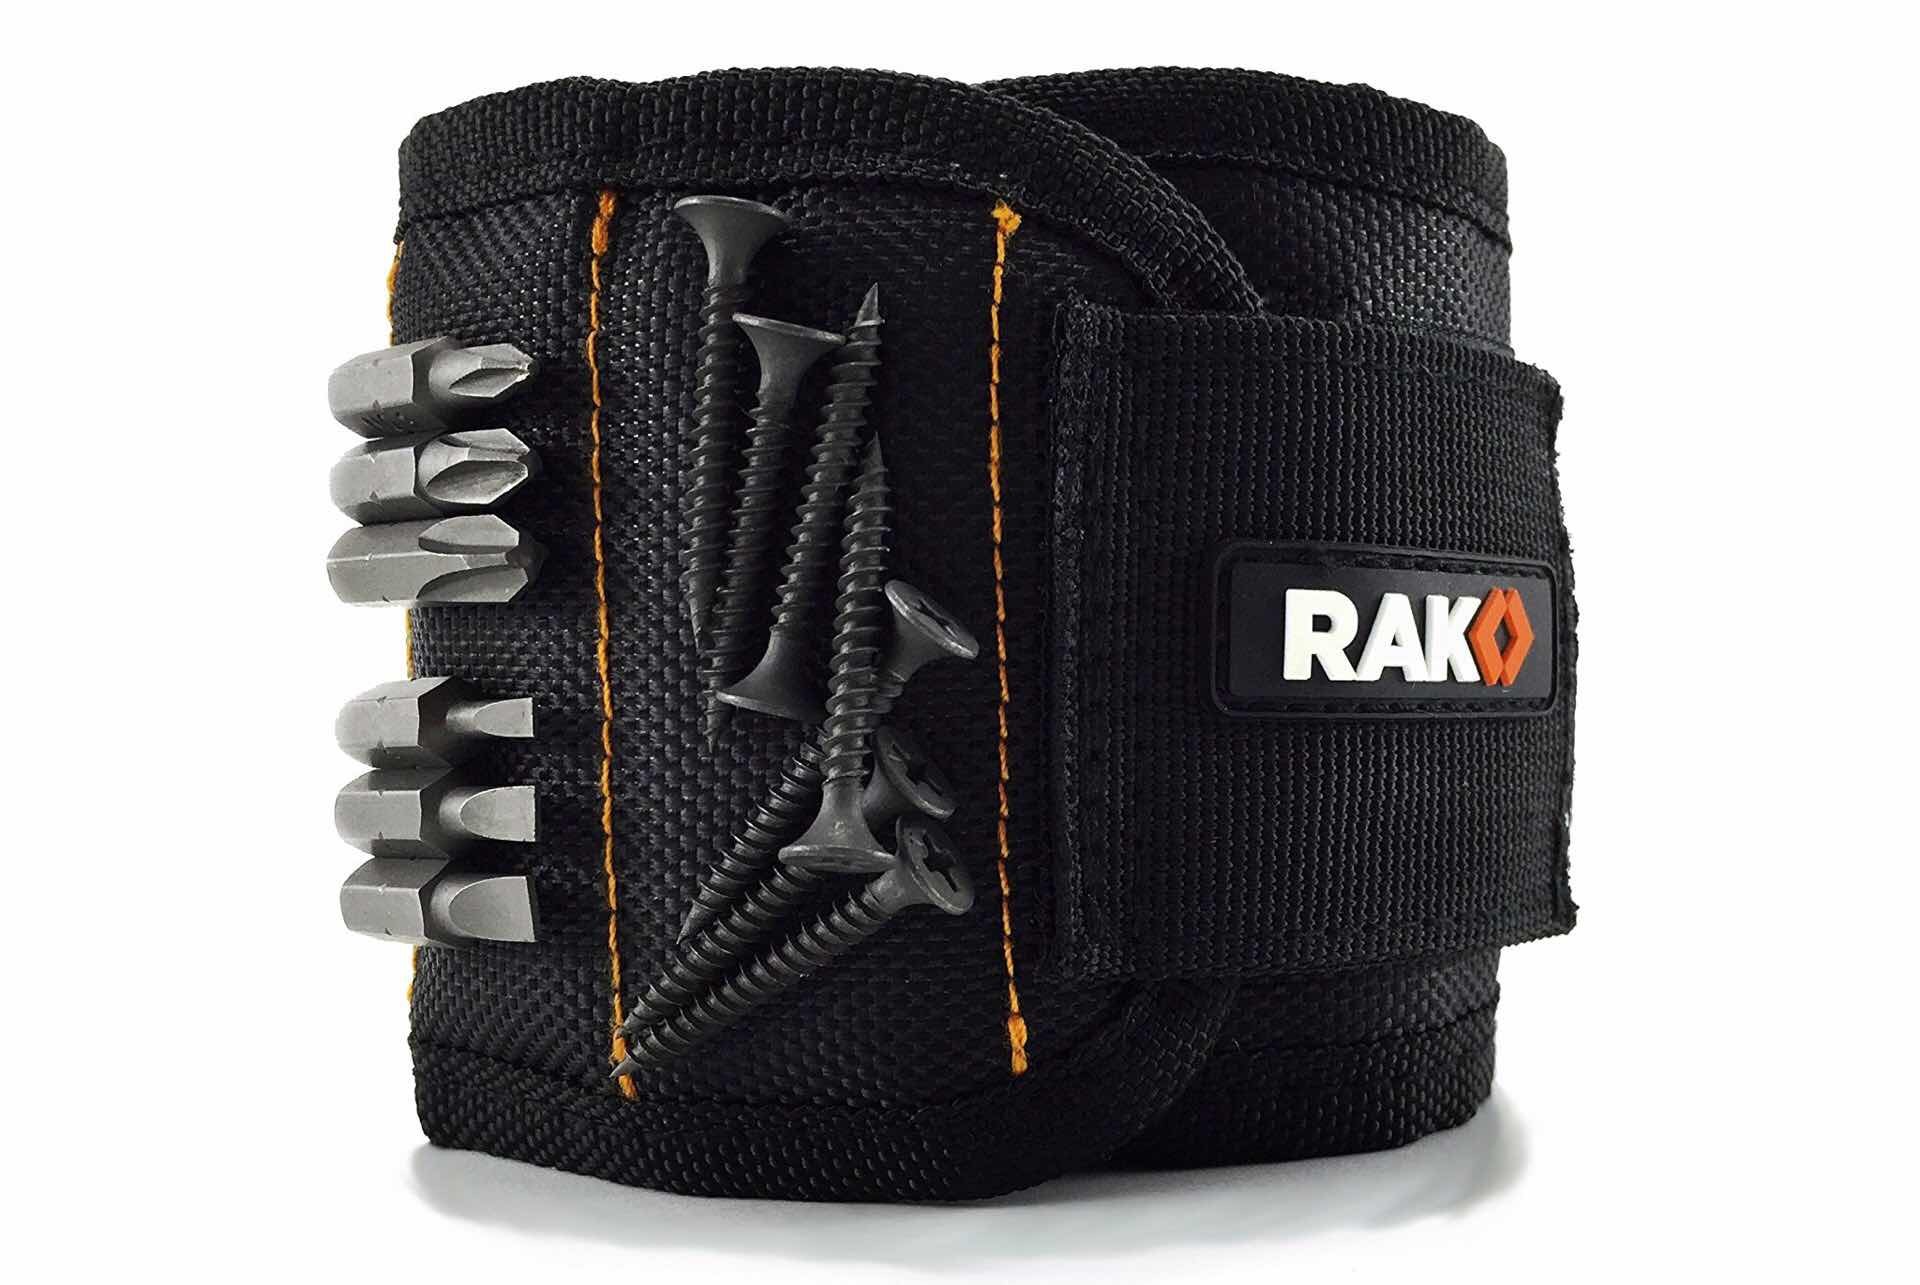 RAK magnetic wristband. ($13)